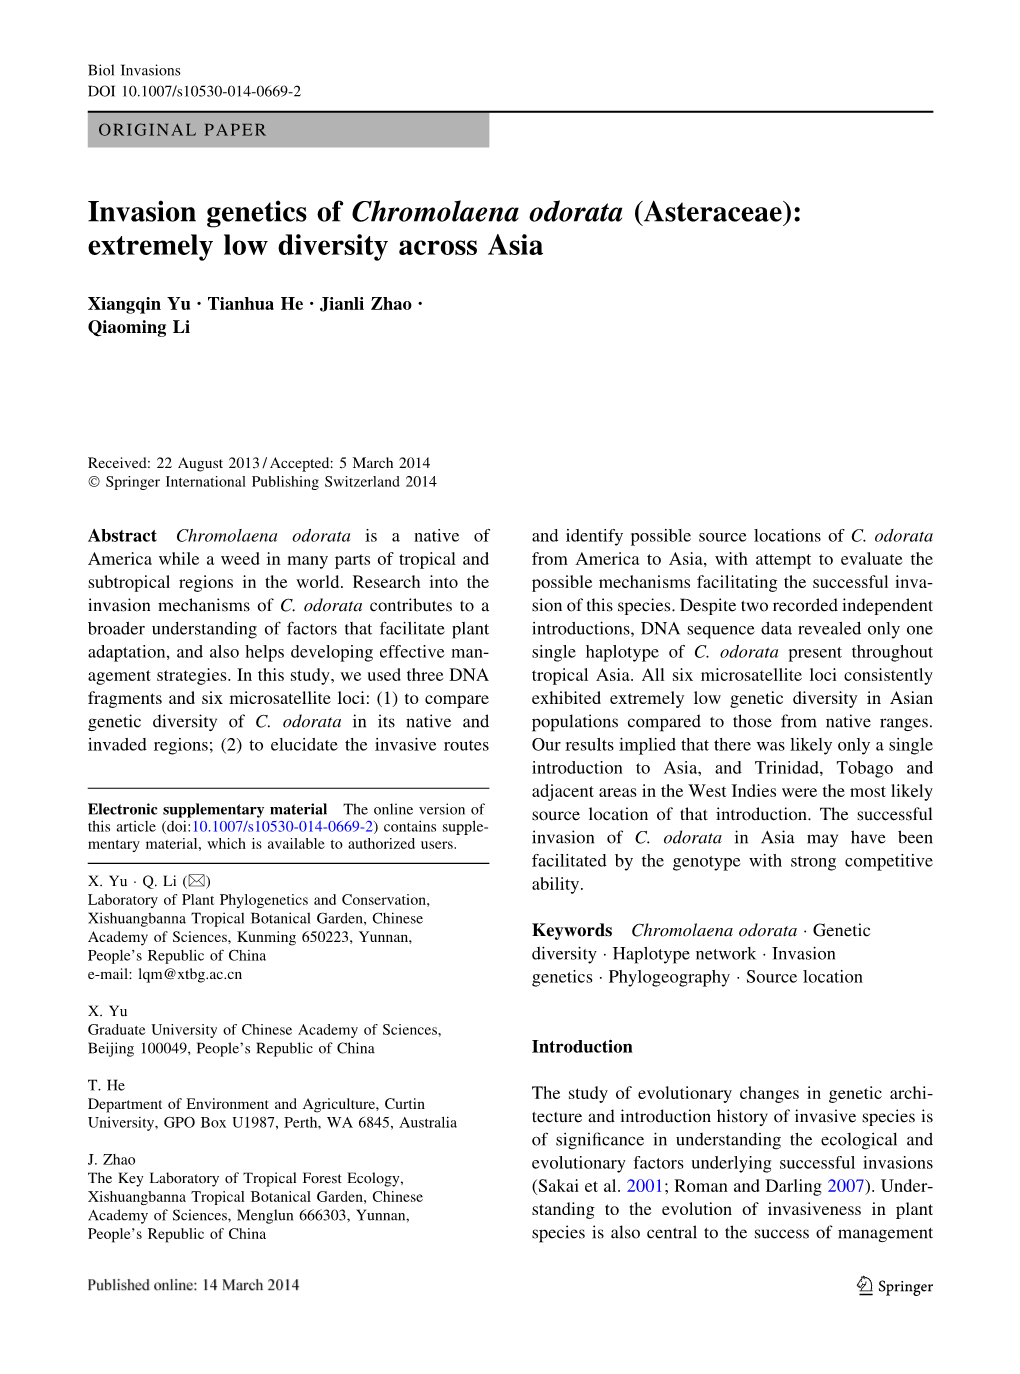 Invasion Genetics of Chromolaena Odorata (Asteraceae): Extremely Low Diversity Across Asia